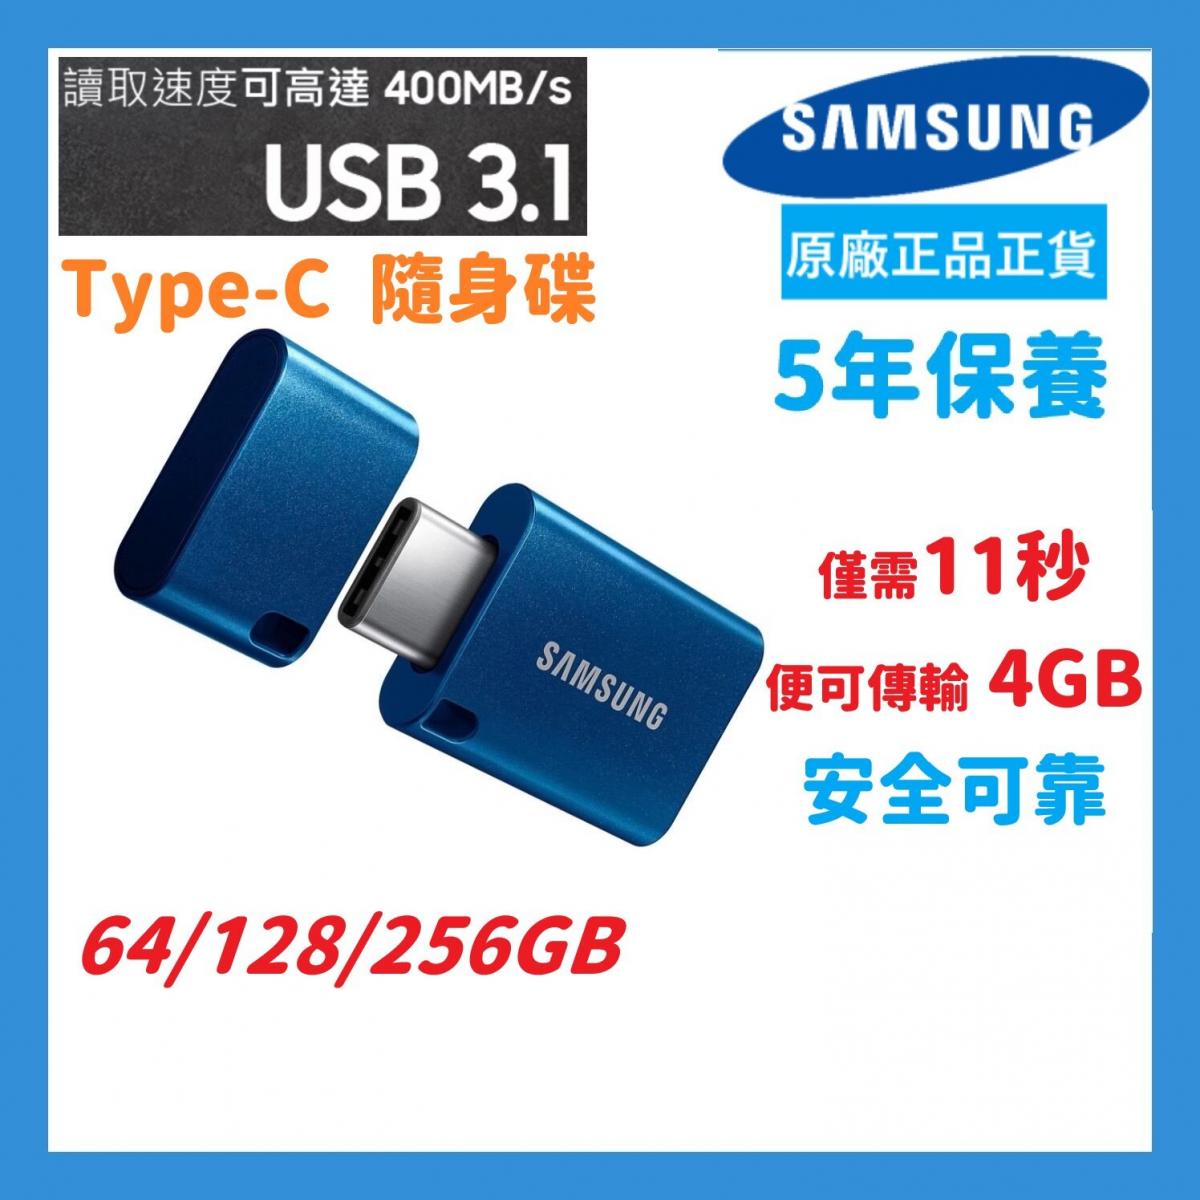 64GB Duo Plus Type-C USB 3.1 Flash Drive (MUF-64DA/APC) -【原裝正貨】